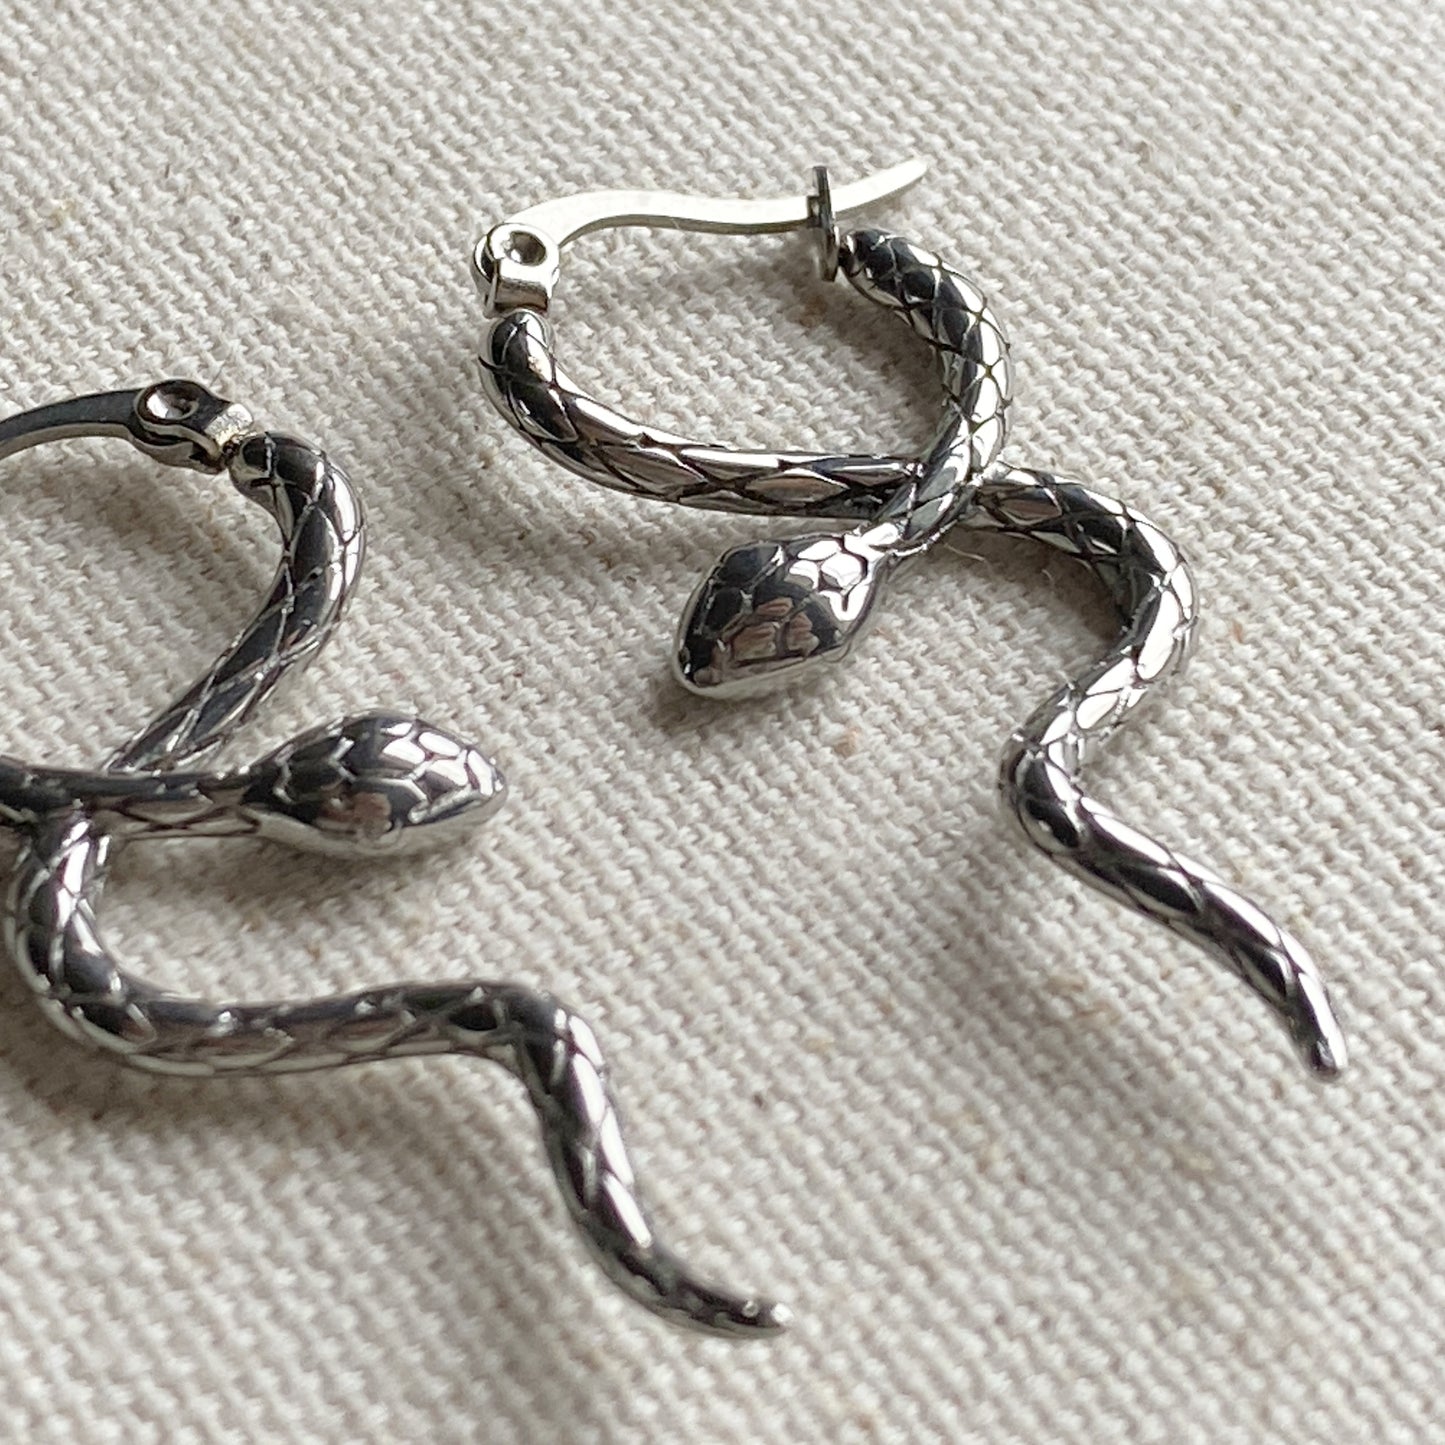 Snake Earrings Silver Stainless Steel